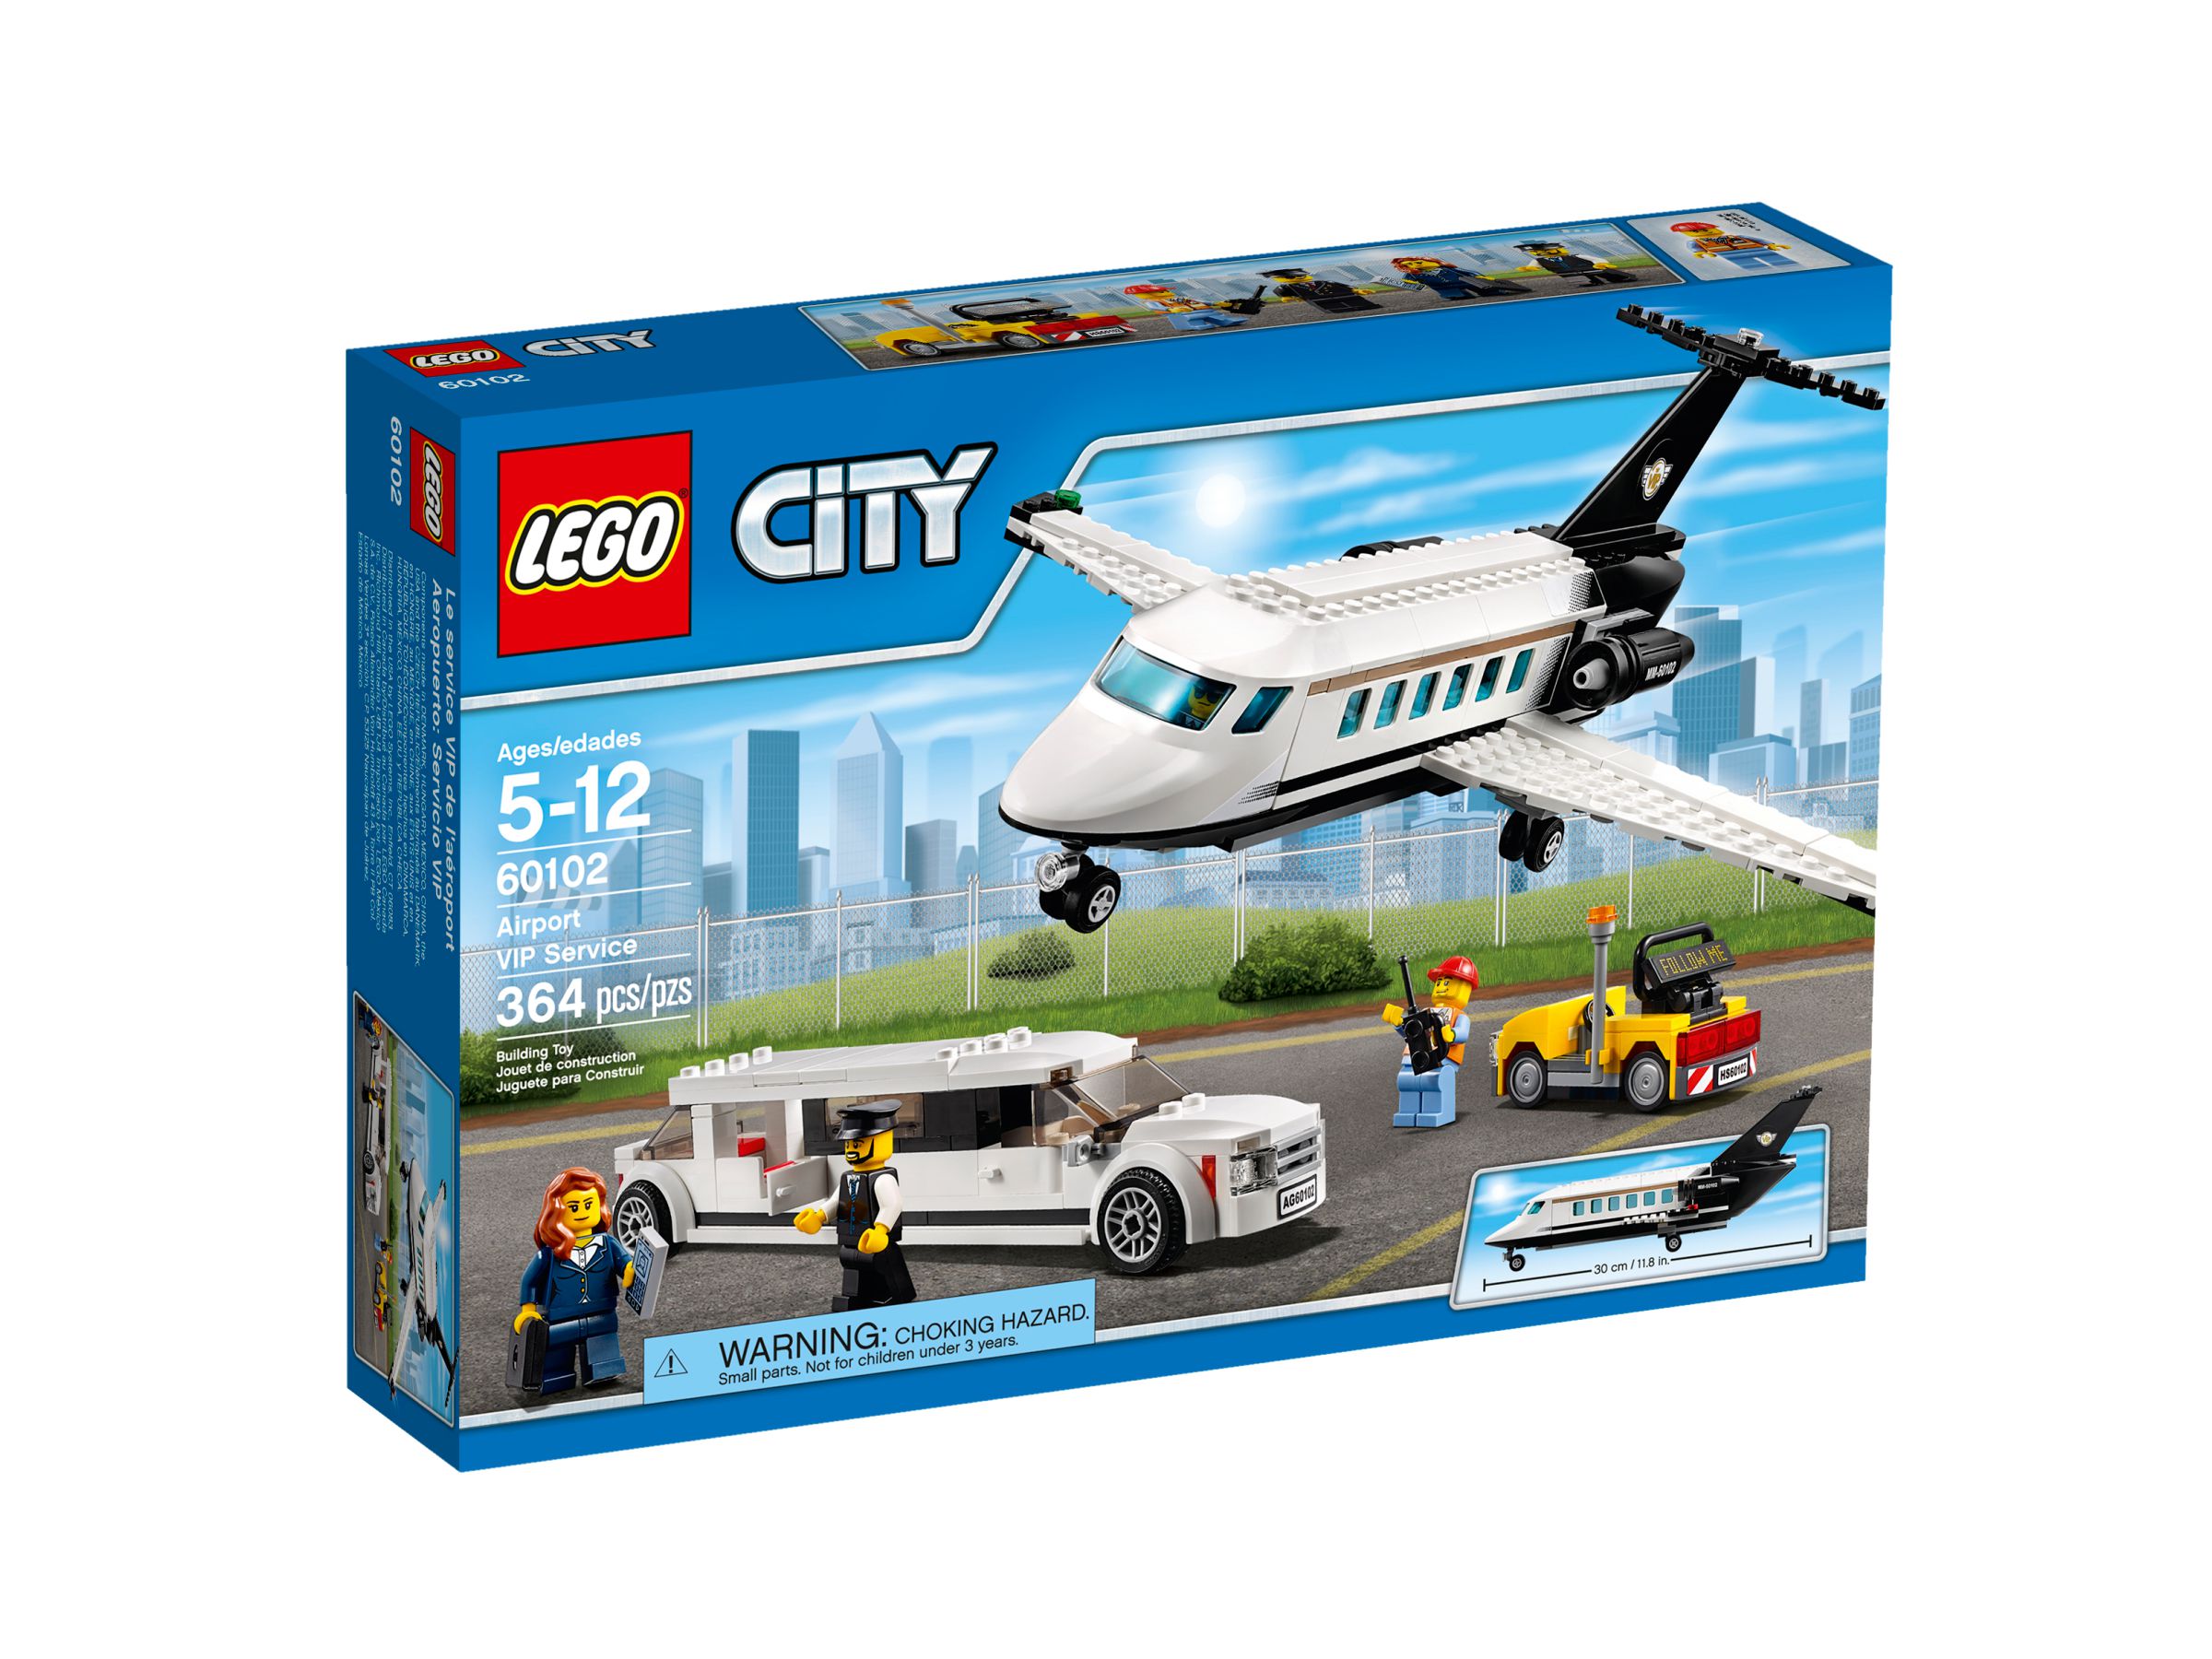 LEGO City 60102 Flughafen VIP-Service LEGO_60102_alt1.jpg